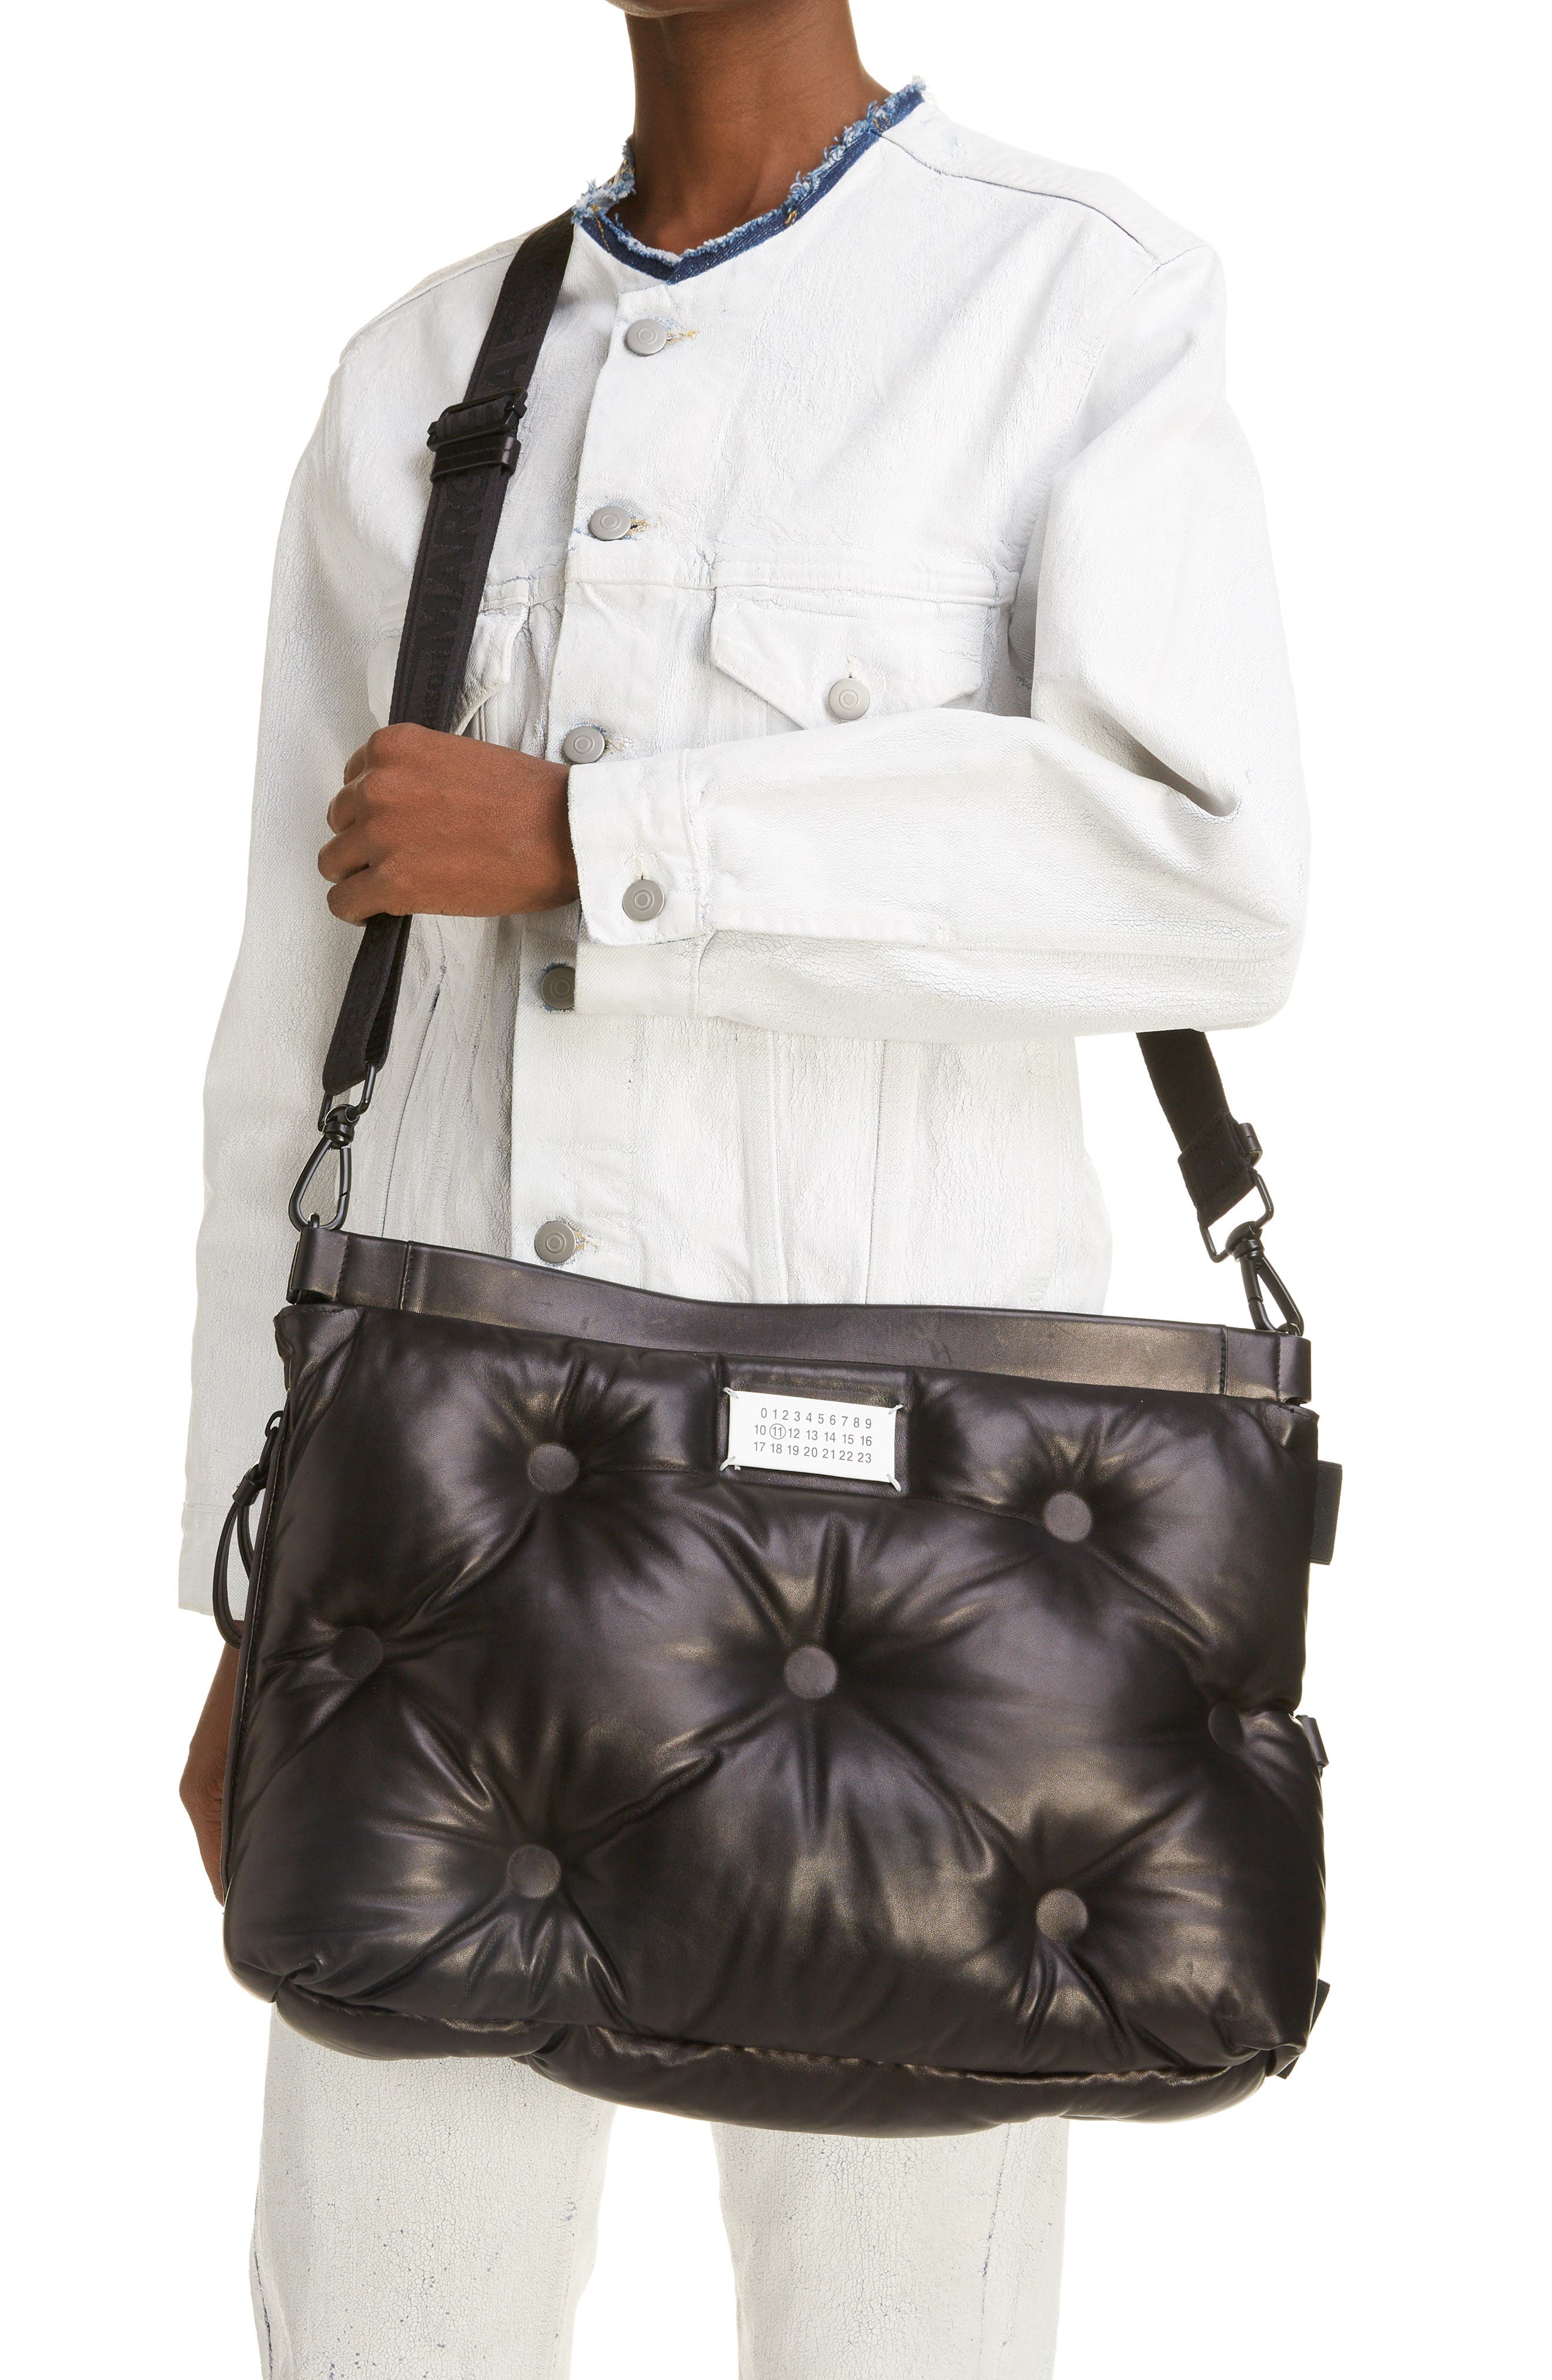 Maison Margiela medium Glam Slam shoulder bag - Neutrals